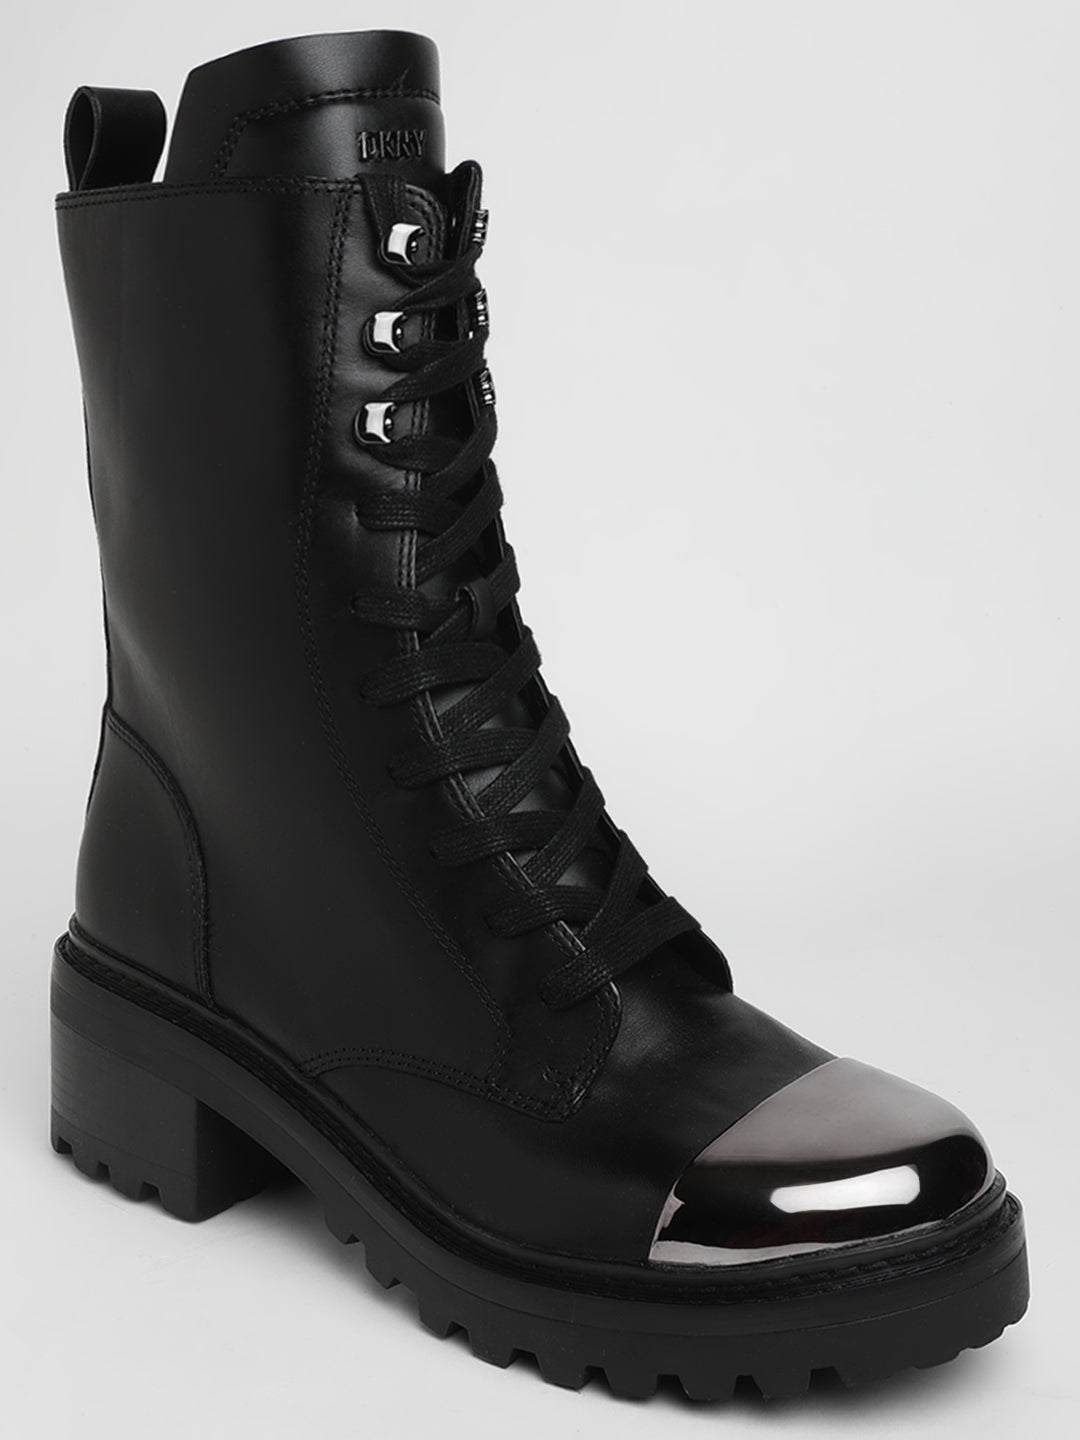 Dkny Metallic Boots Sale | website.jkuat.ac.ke